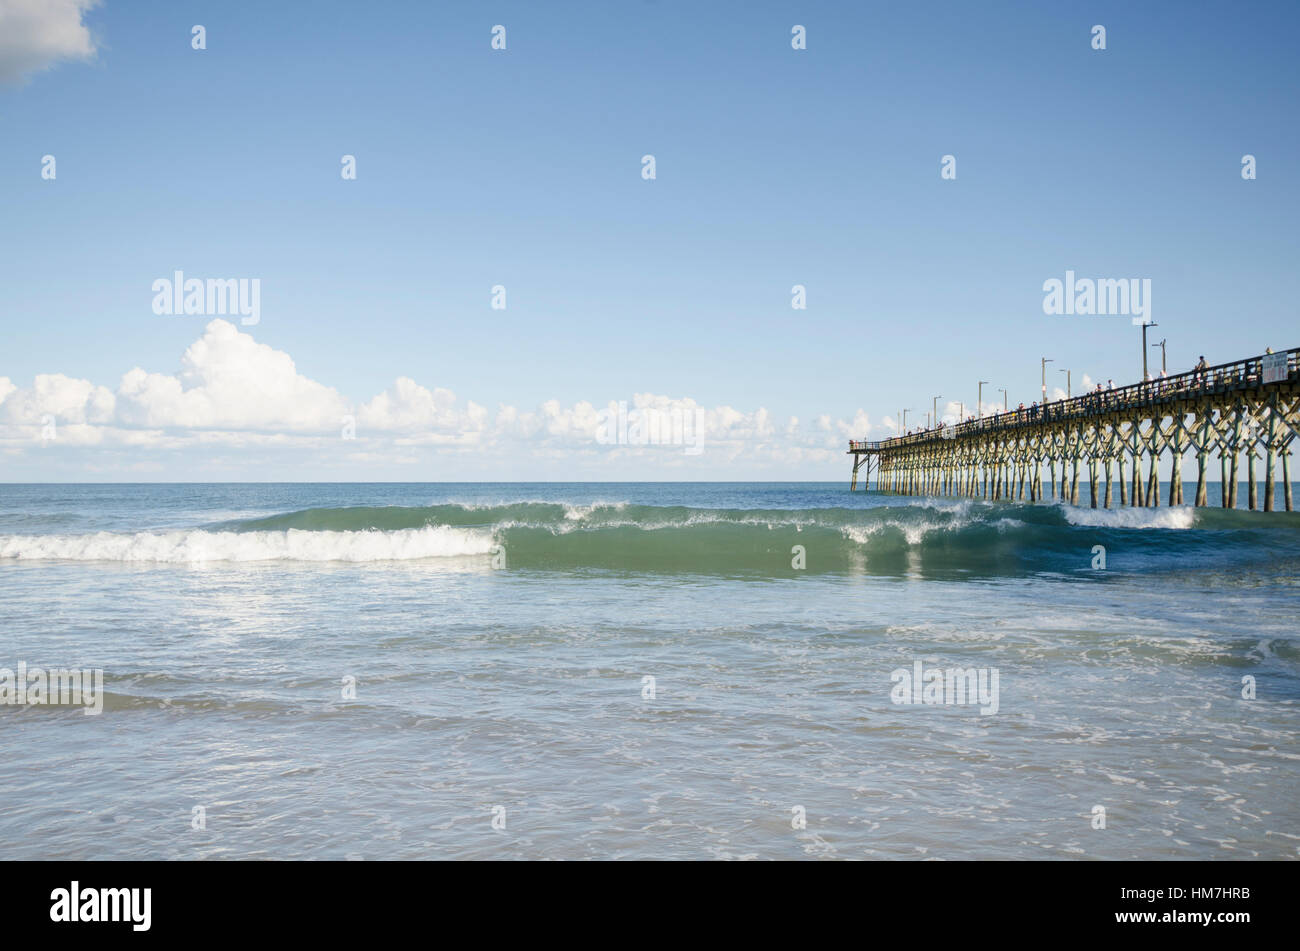 USA, North Carolina, Topsail island, Surf City, Seascape with pier Stock Photo